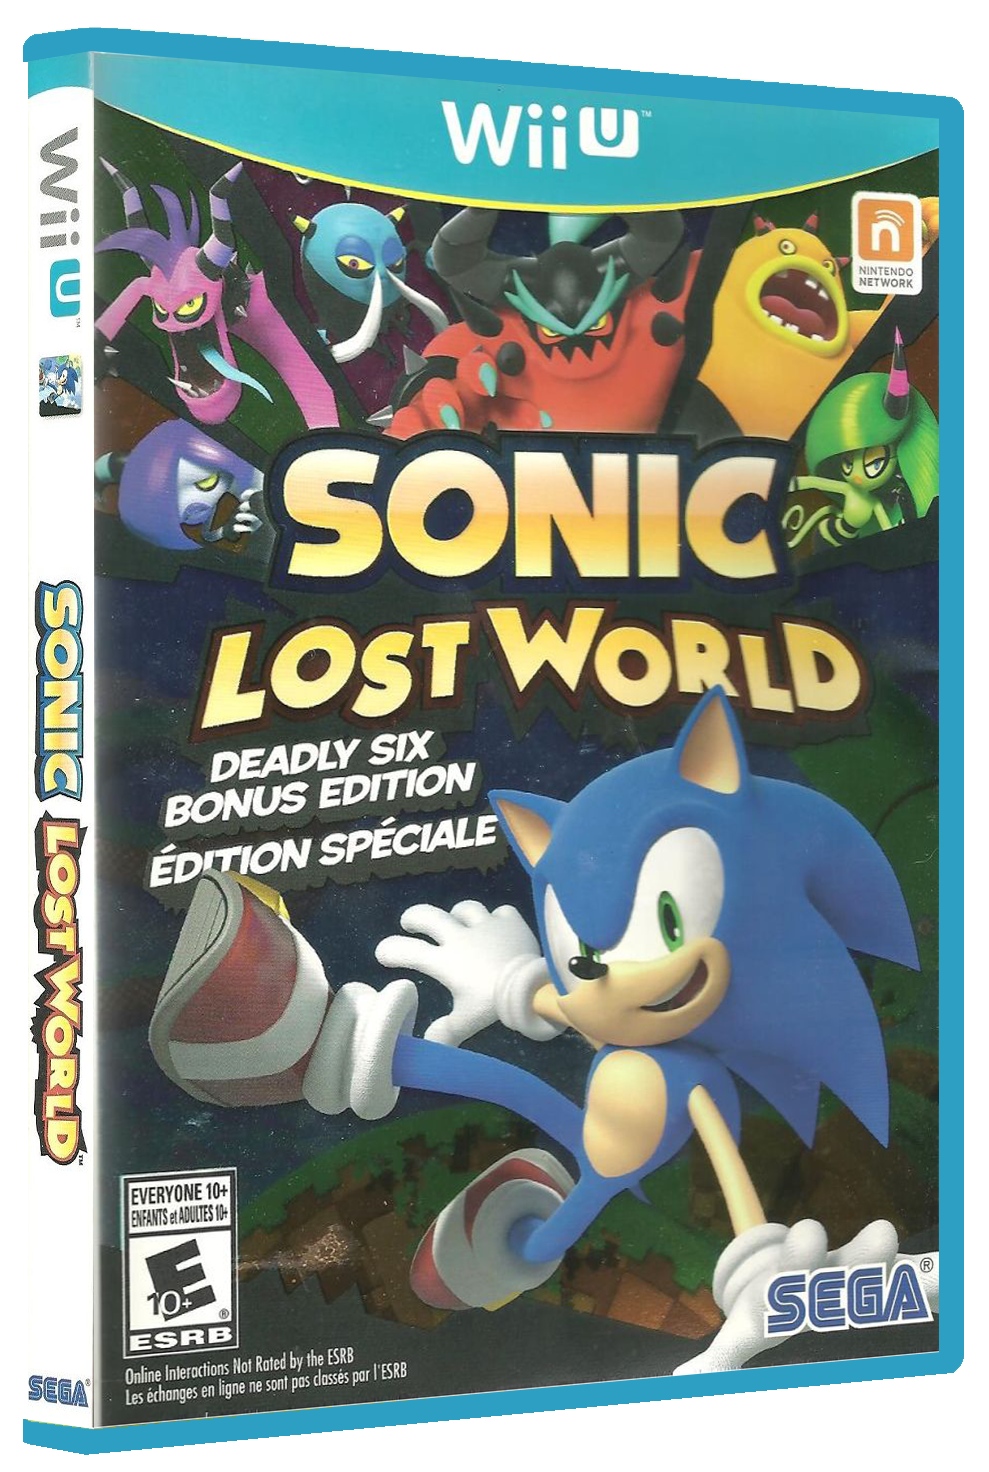 sonic lost world deadly six bonus edition